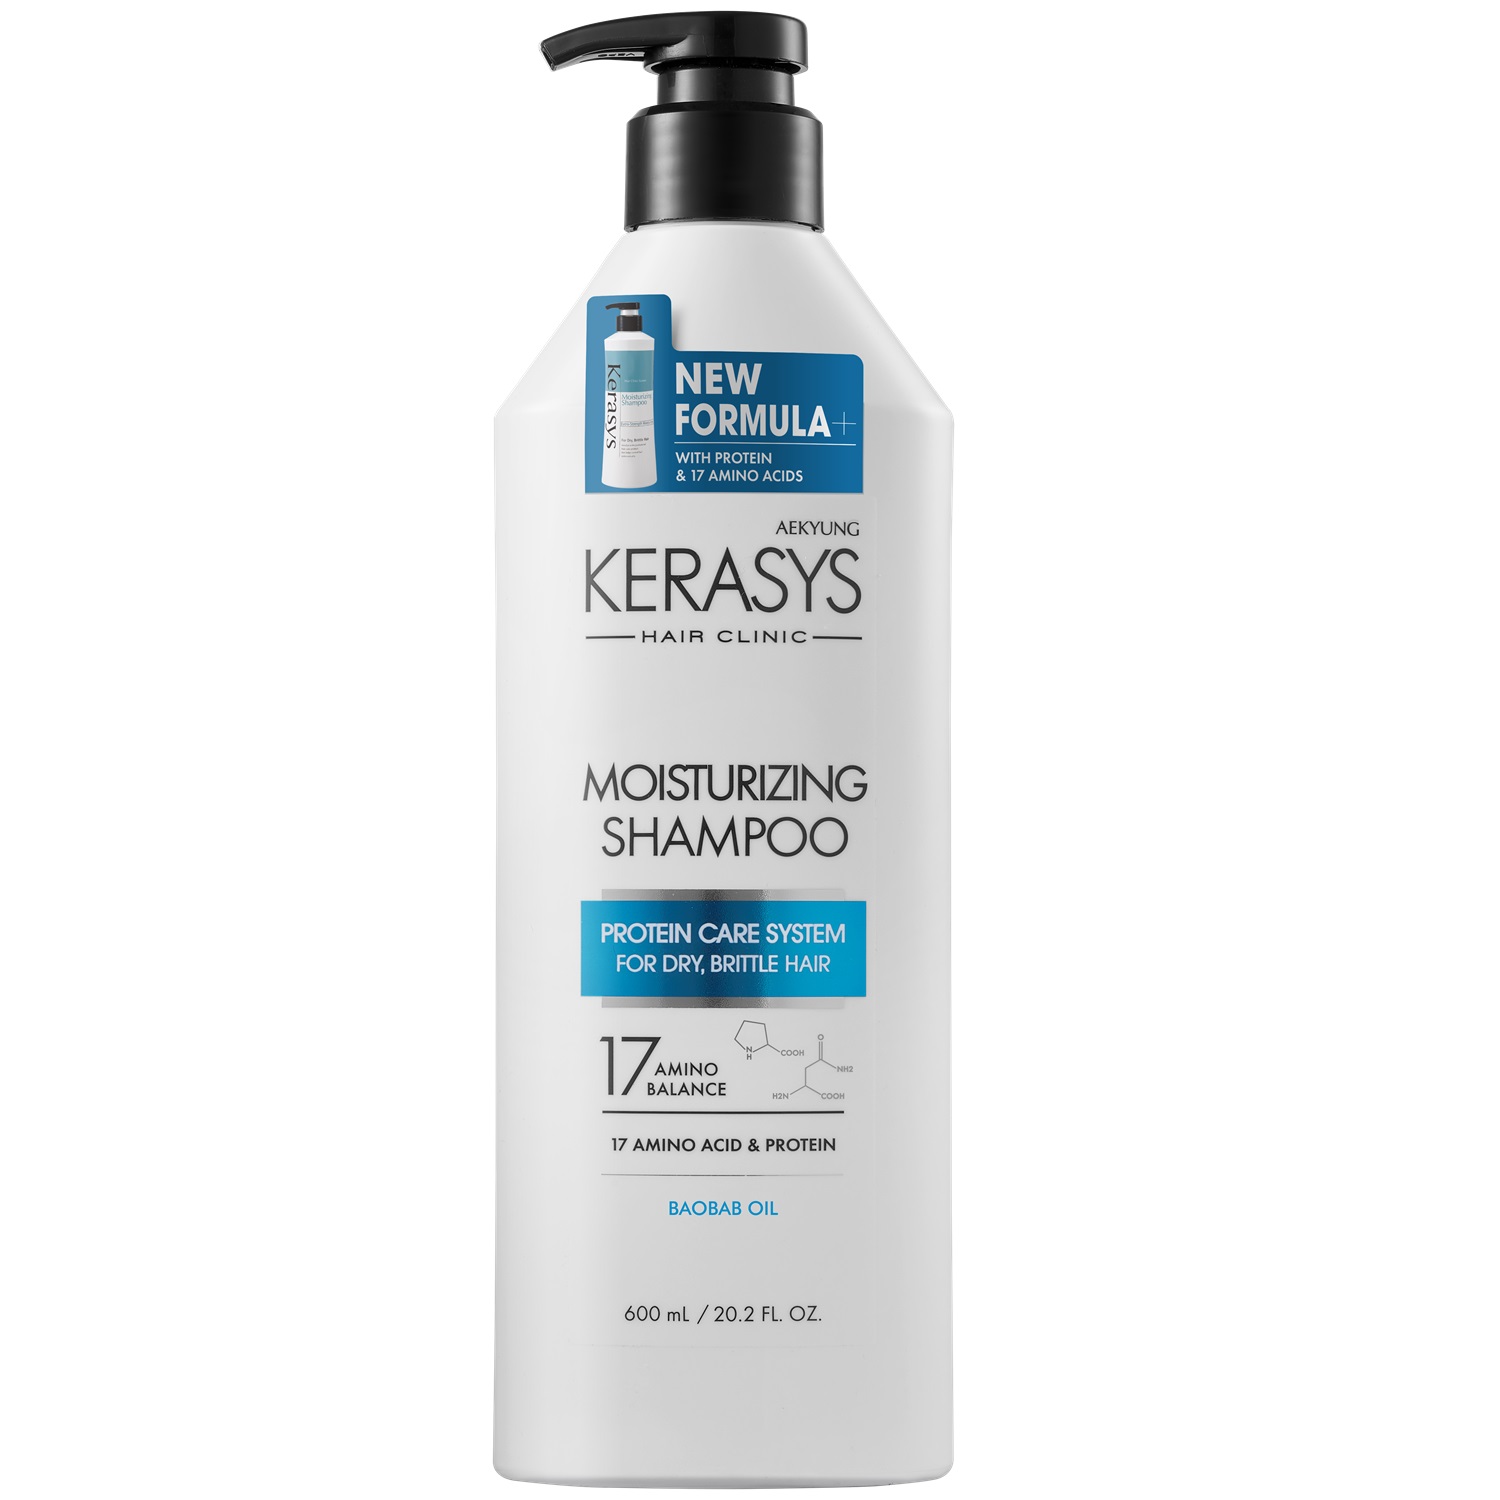 Kerasys Hair Clinic Moisturizing Шампунь увлажняющий для волос 600 мл (Kerasys, )